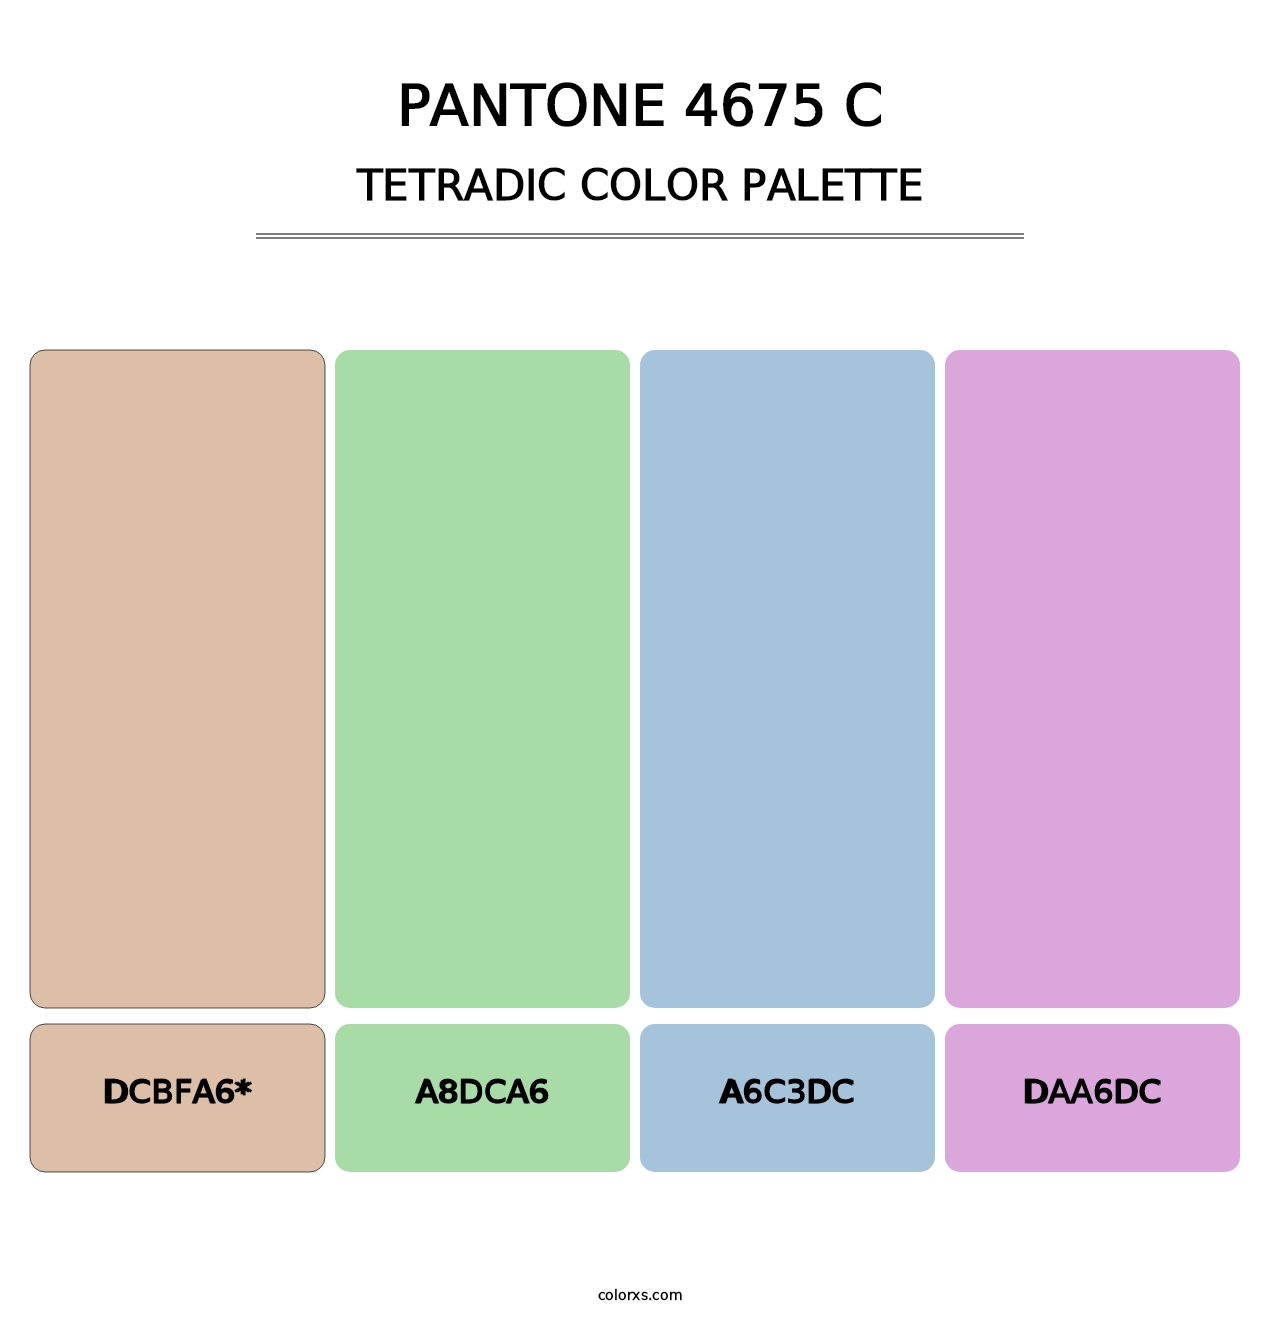 PANTONE 4675 C - Tetradic Color Palette